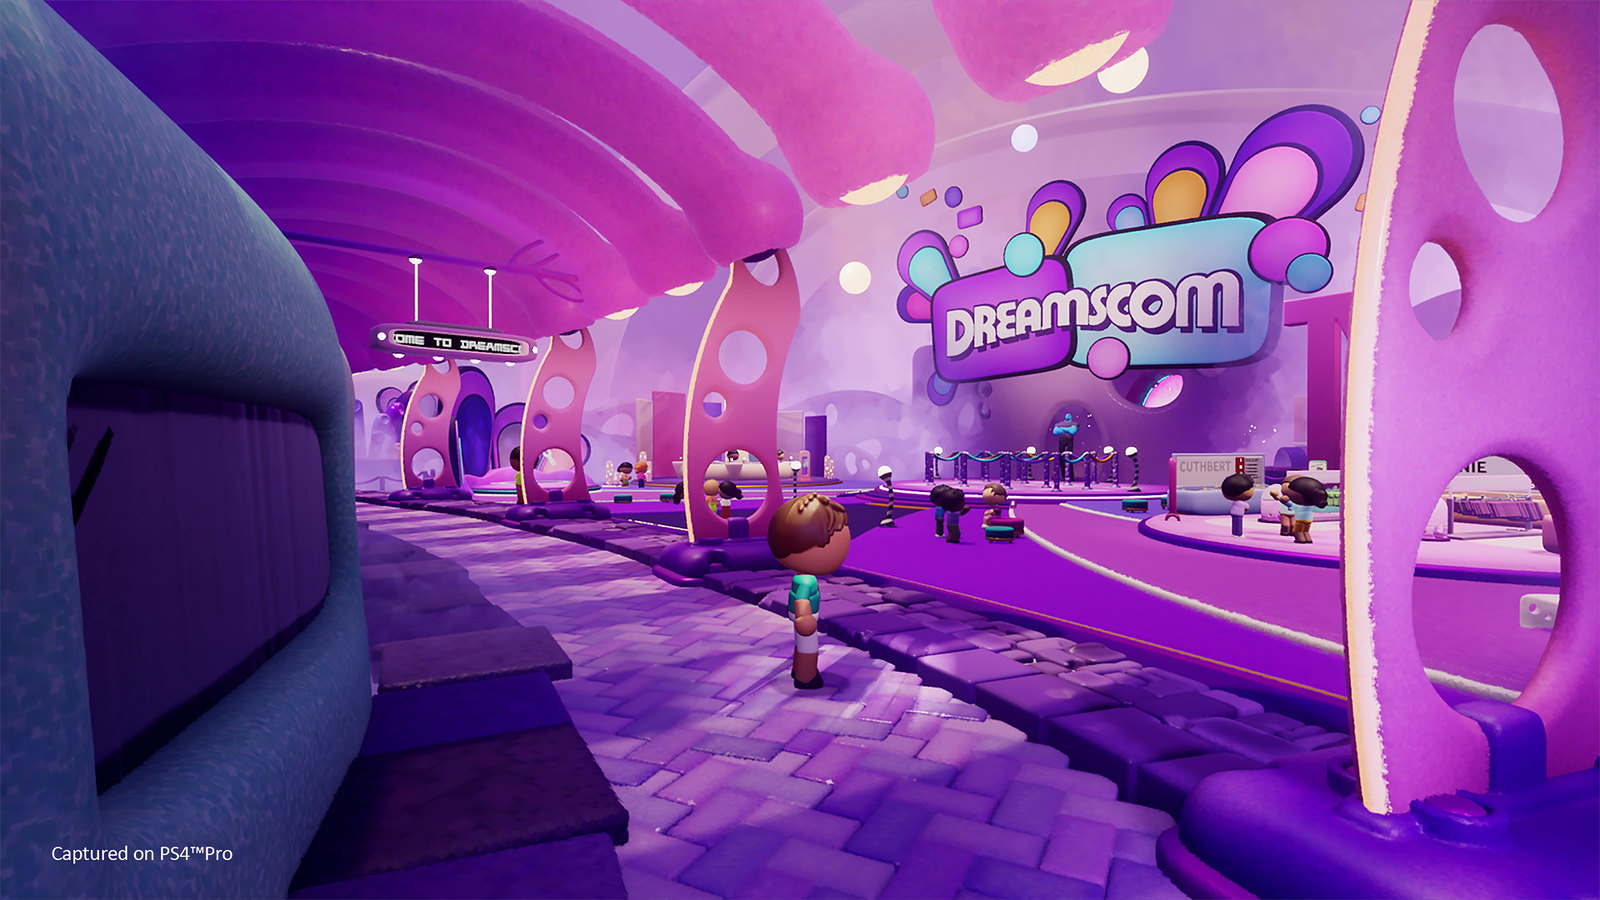 Playstation News: DreamsCom returns starting May 26